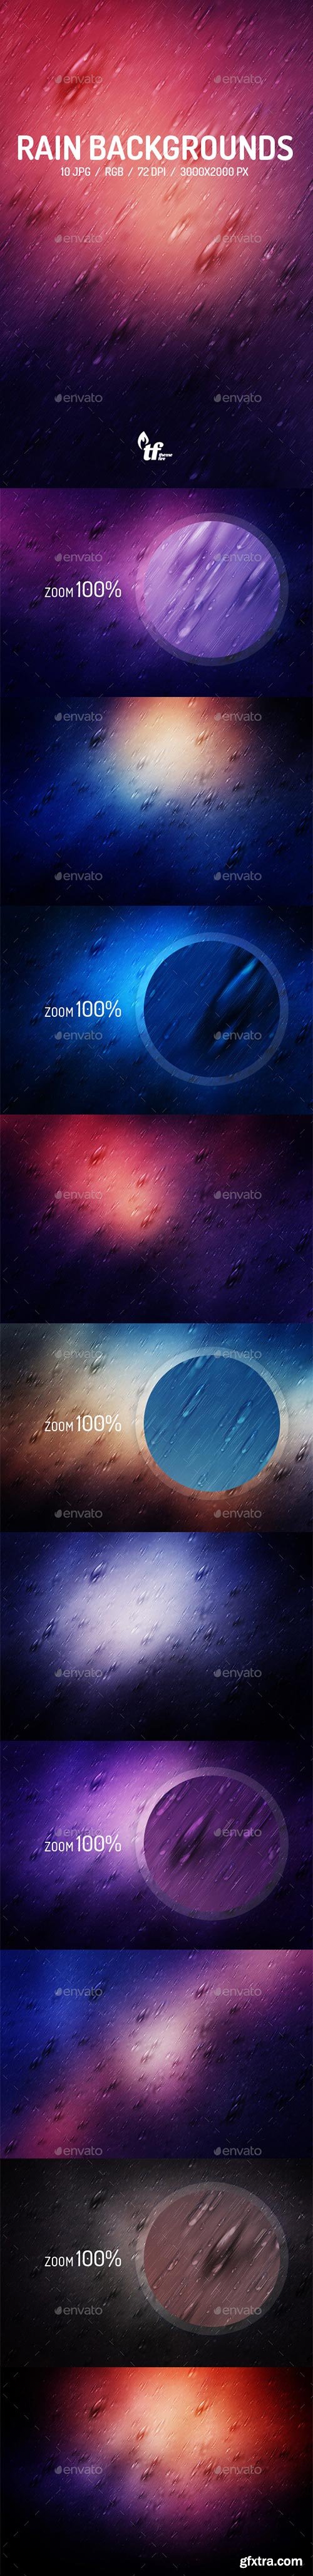 GraphicRiver - Rain Backgrounds 9029550